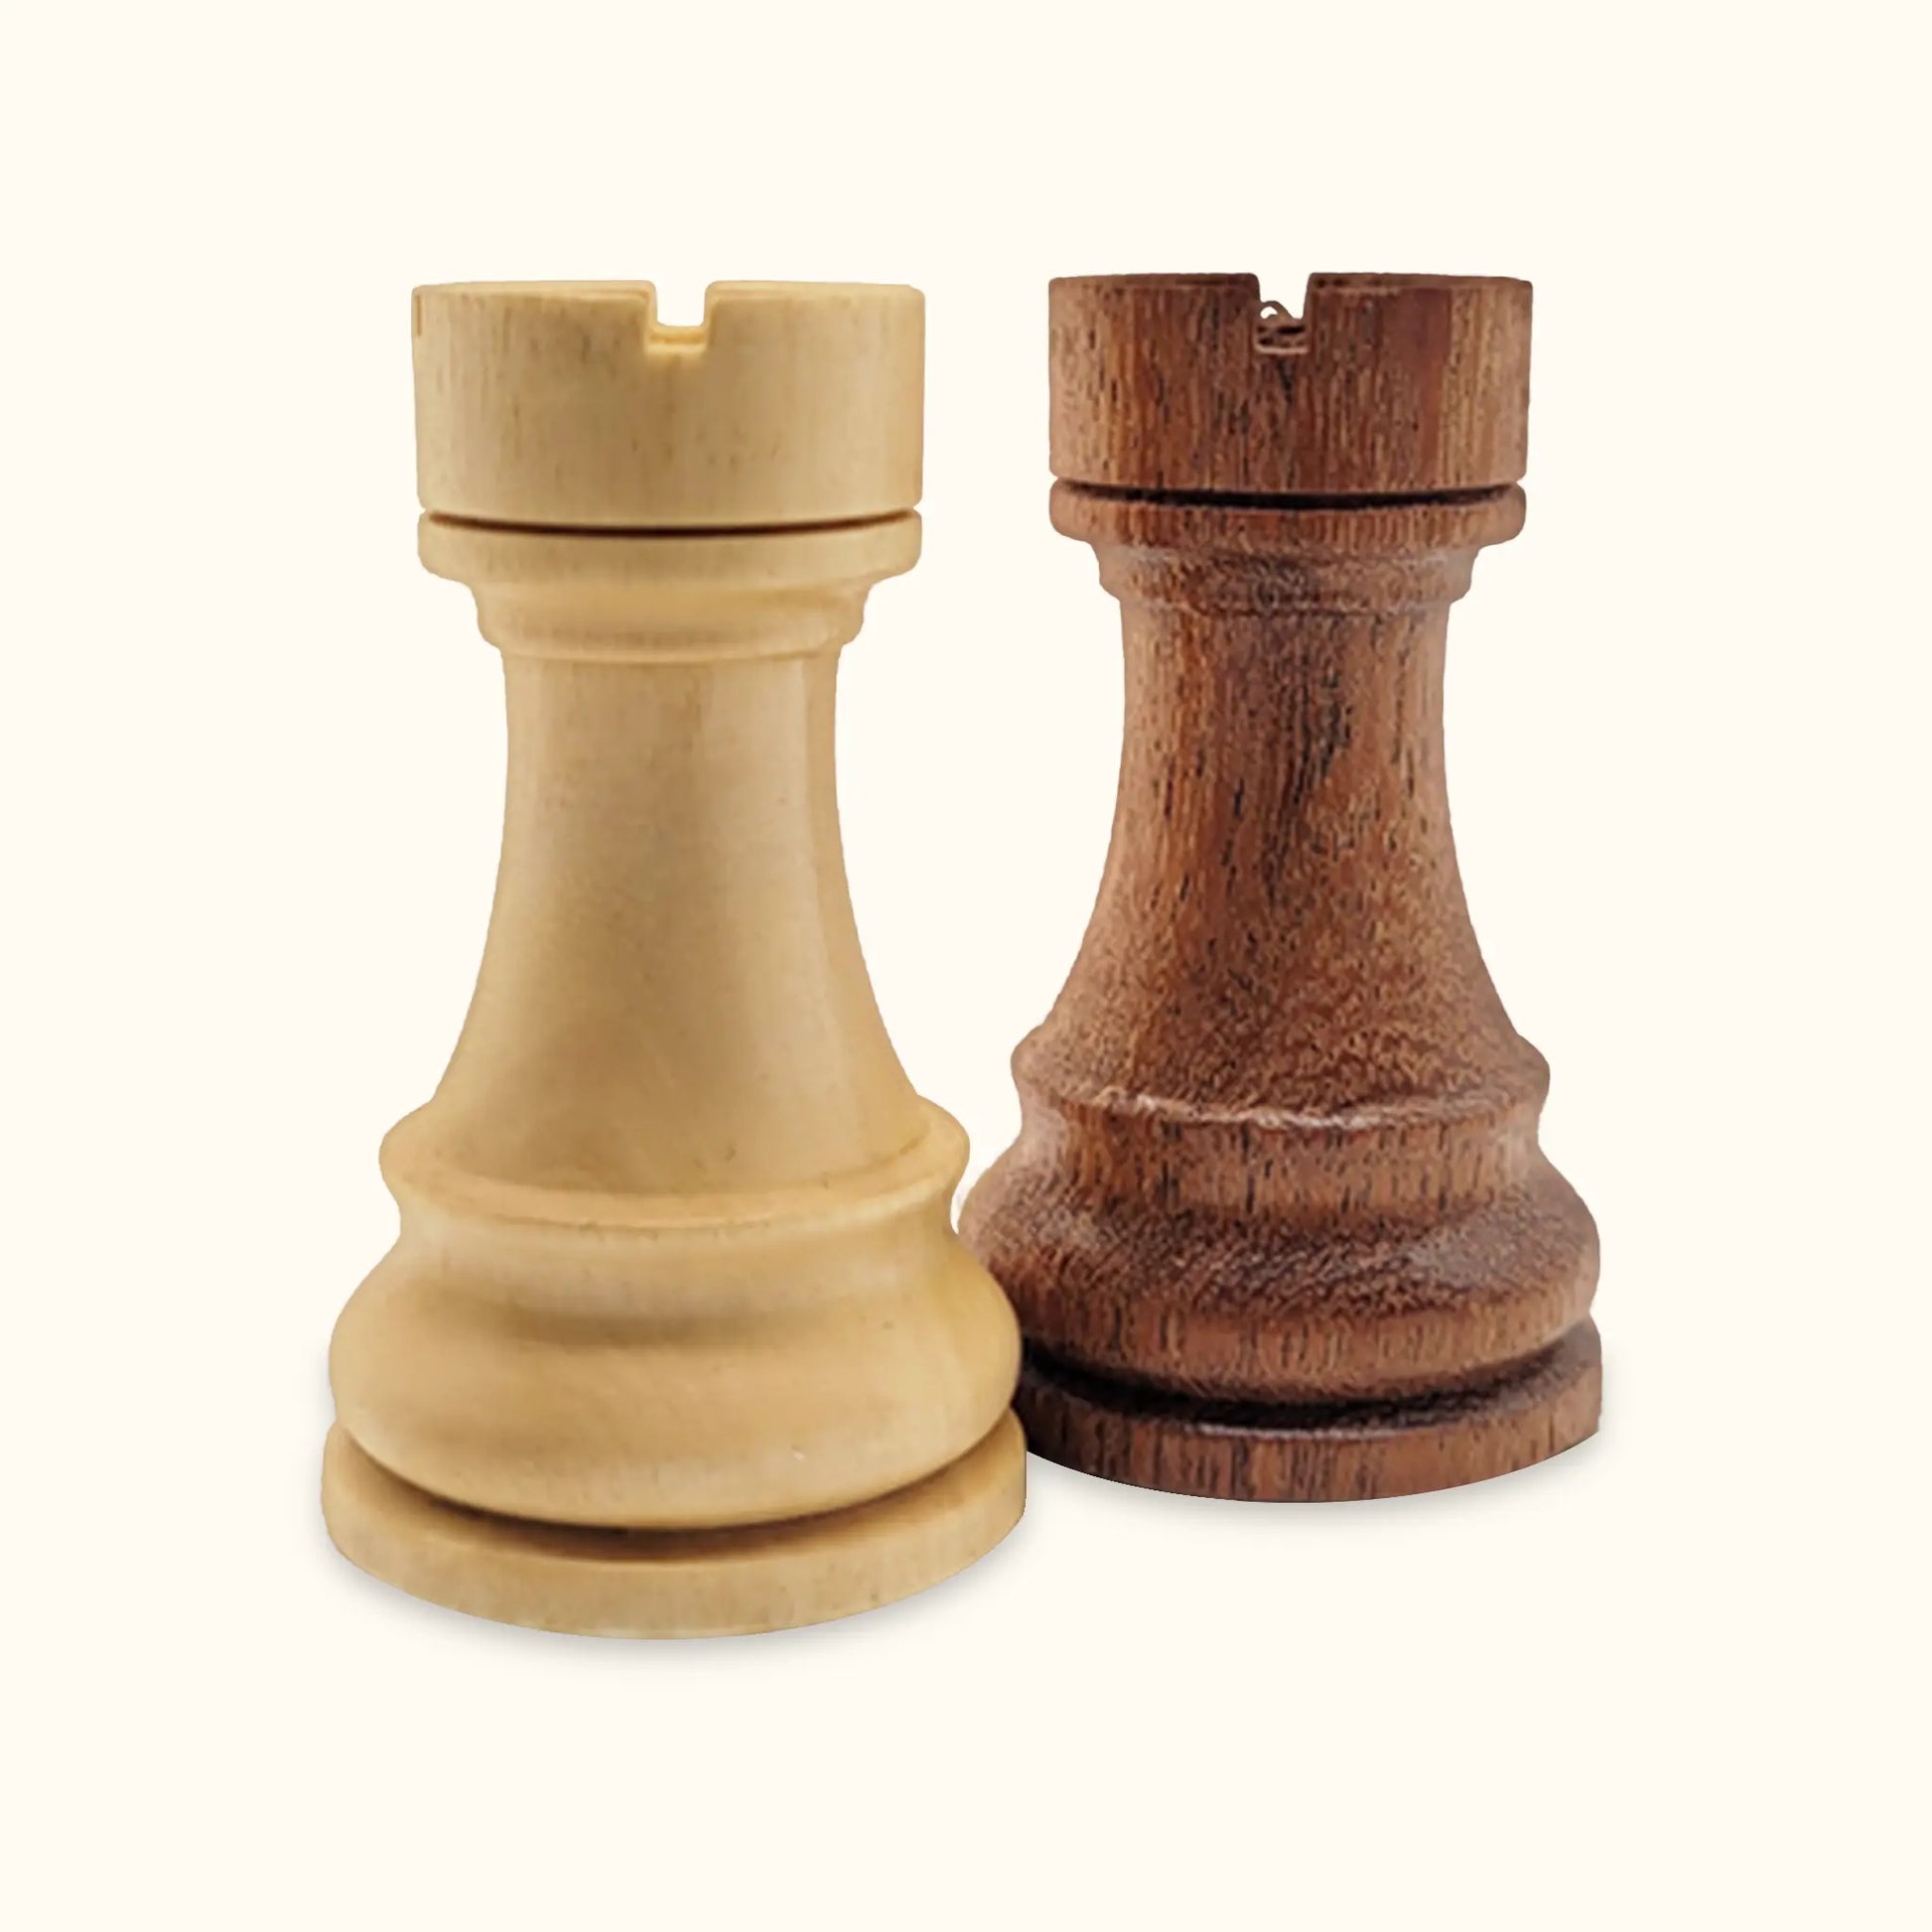 Chess pieces French Staunton acacia rook